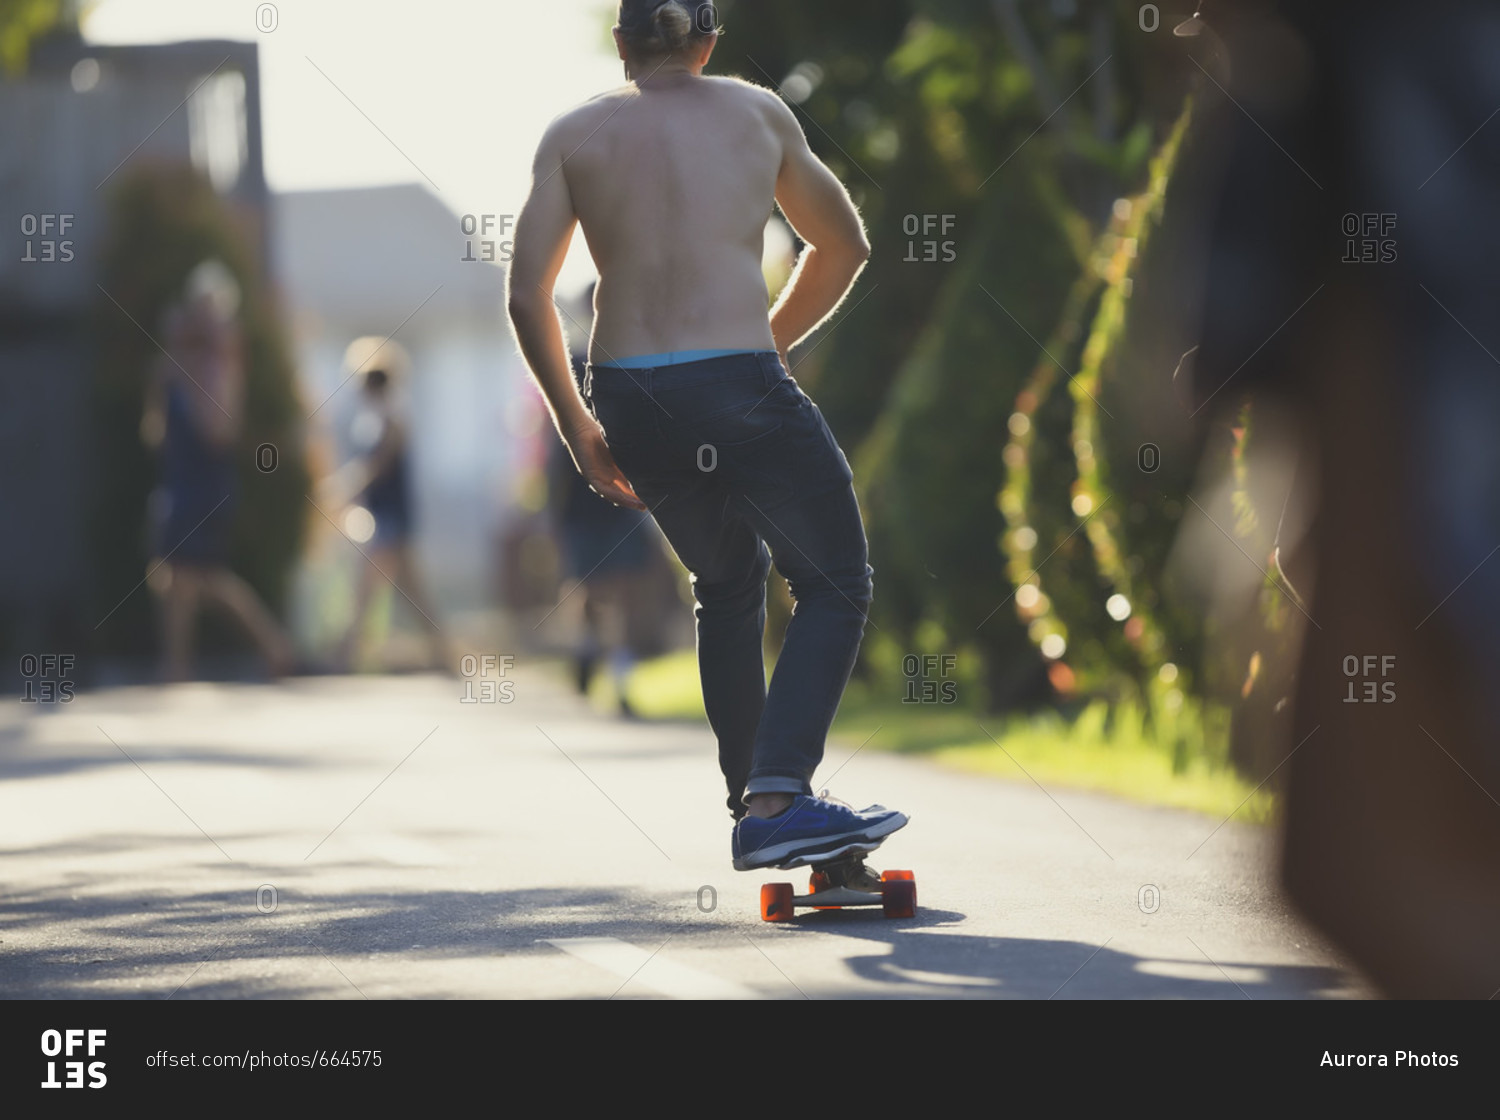 Young man skateboarding in street, Canggu, Bali, Indonesia